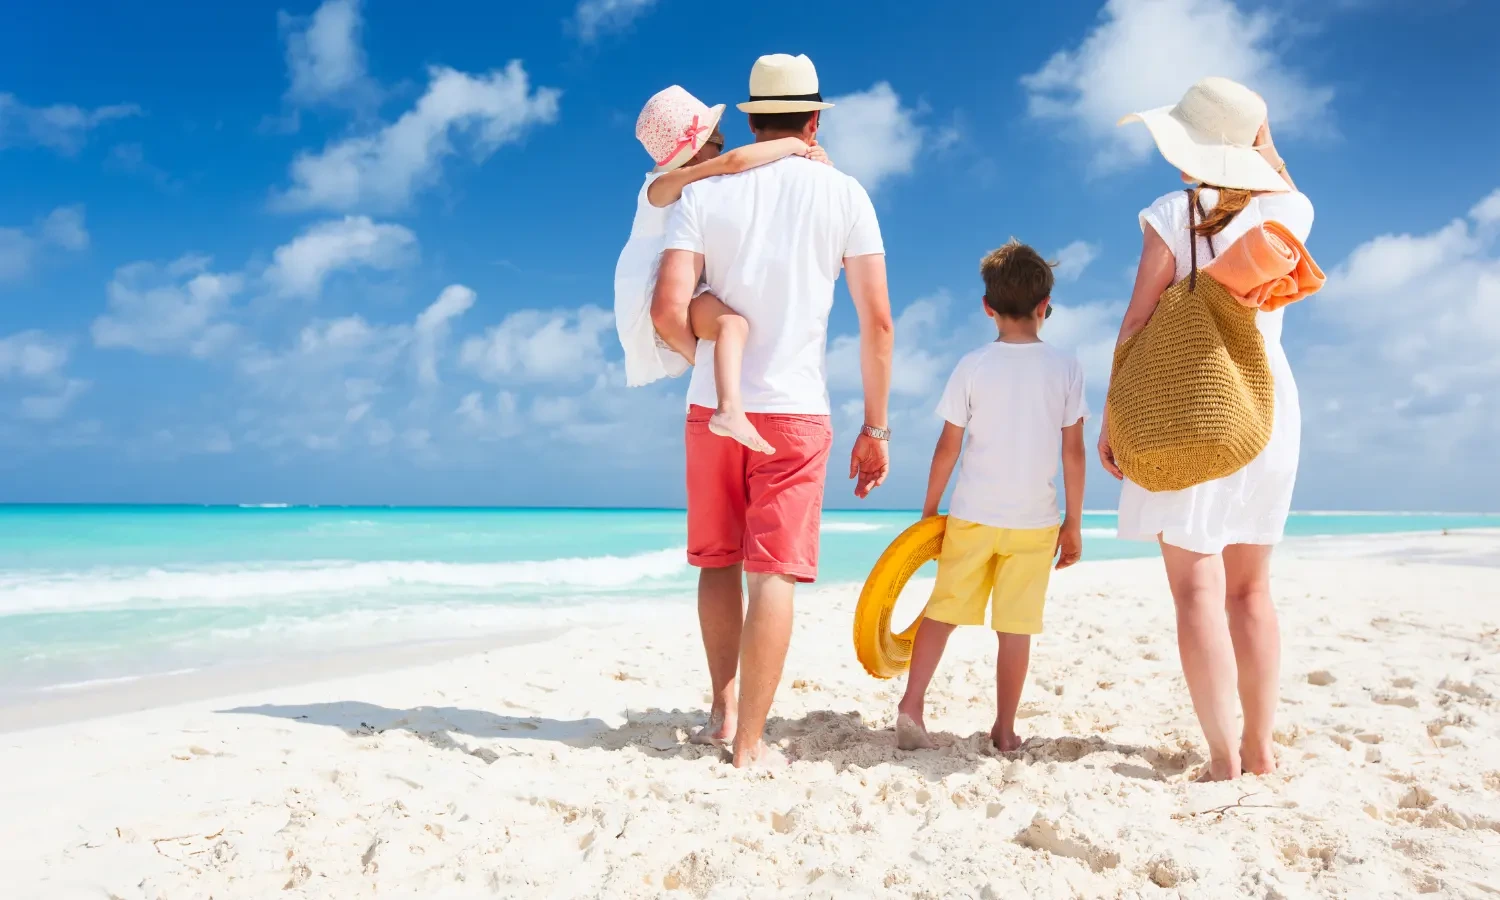 La Spiaggia di Cefalù features a sandy beach perfect for families